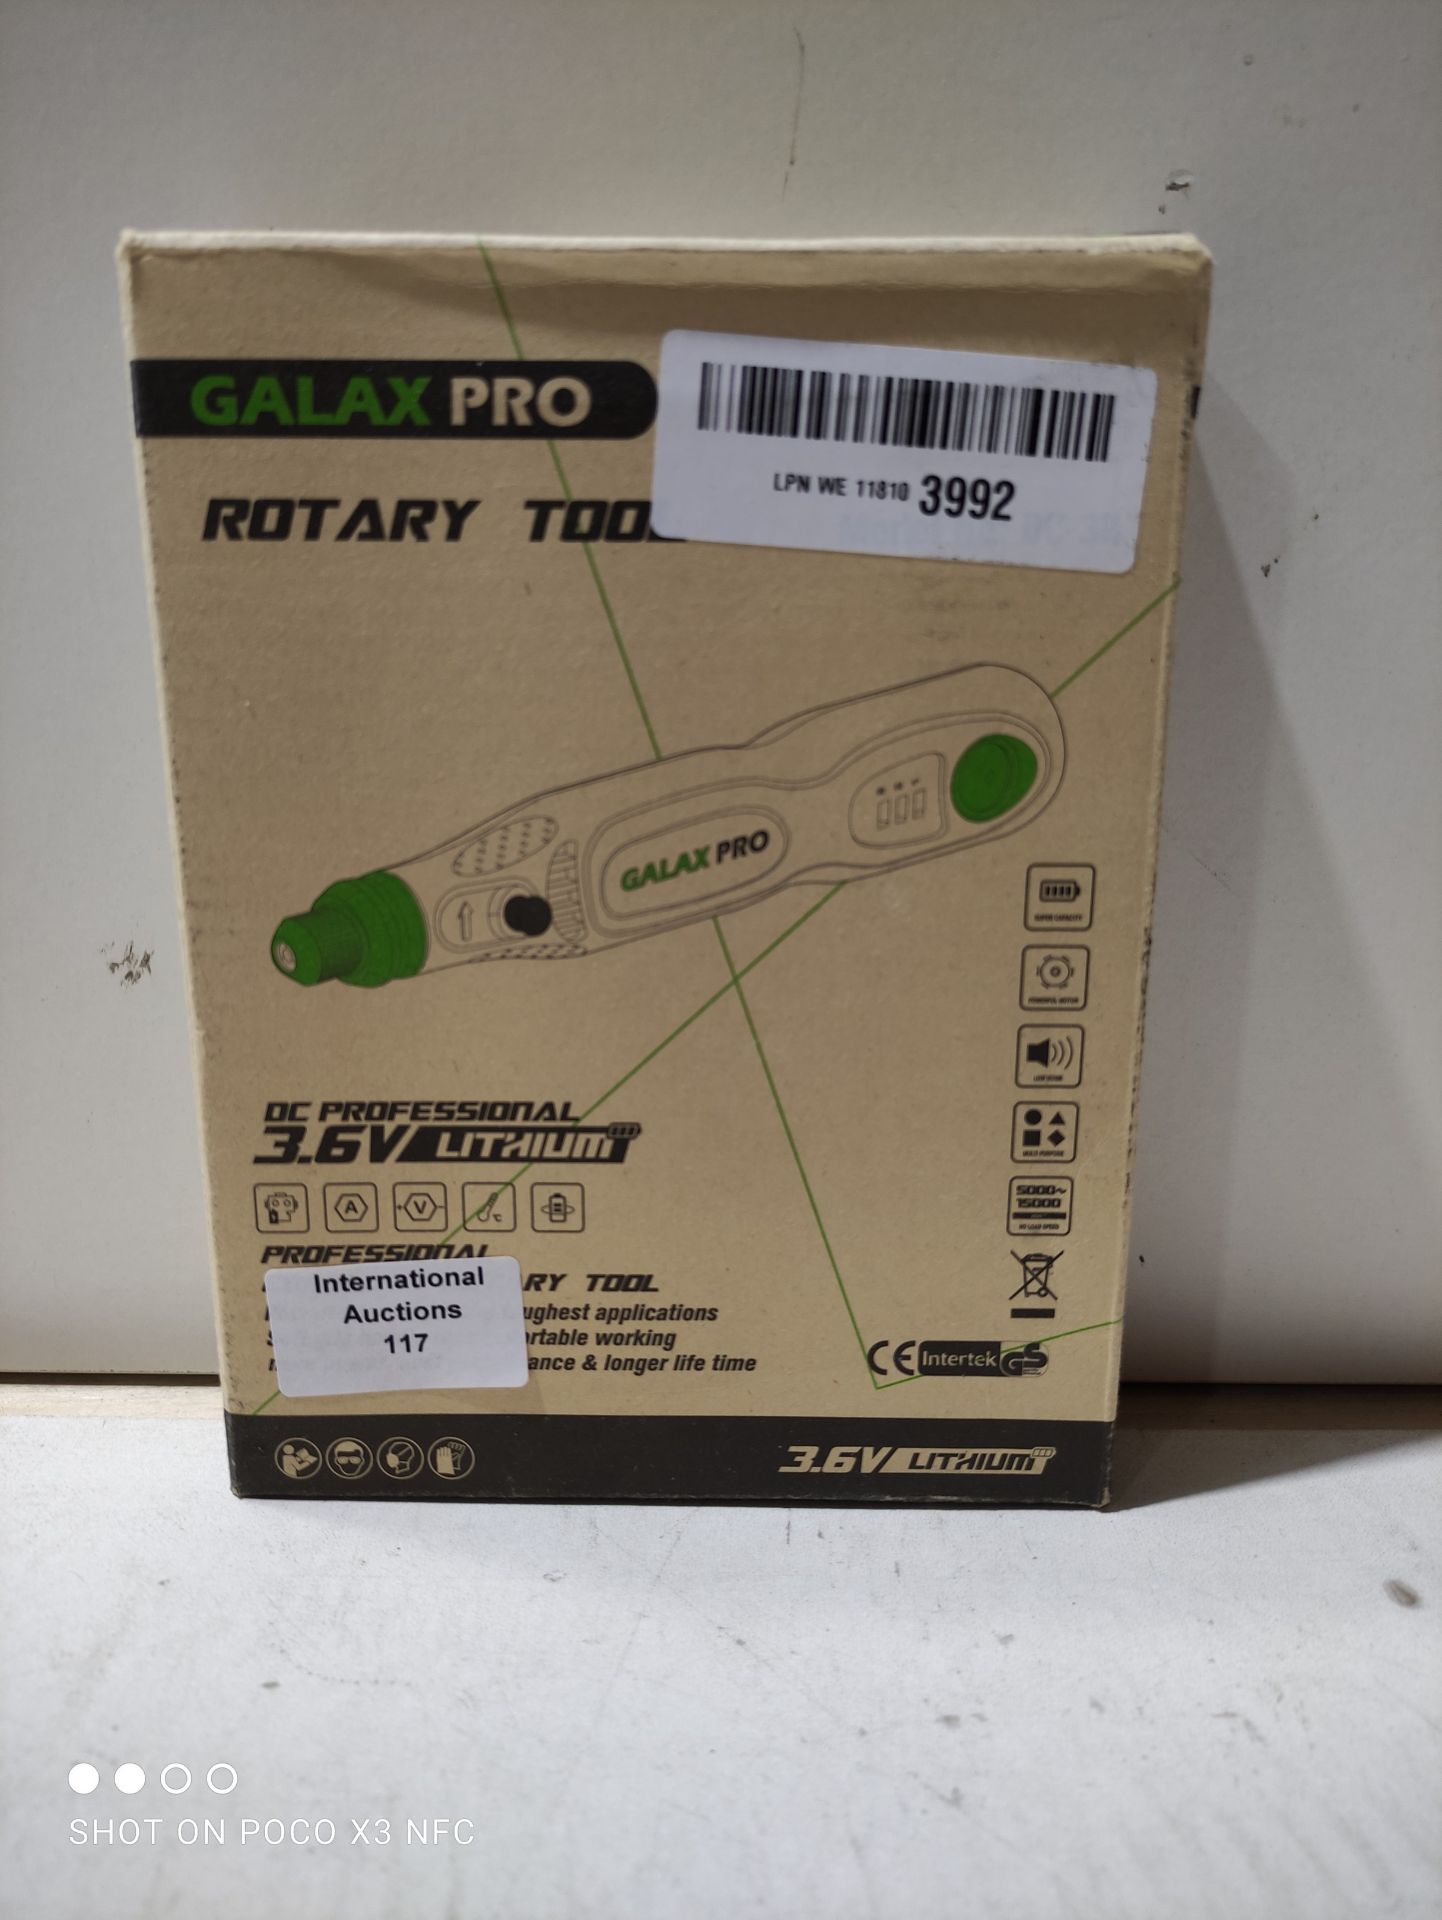 RRP £18.98 GALAX PRO 3.6V Lithium Ion Mini Cordless Rotary Tool Kit - Image 2 of 2